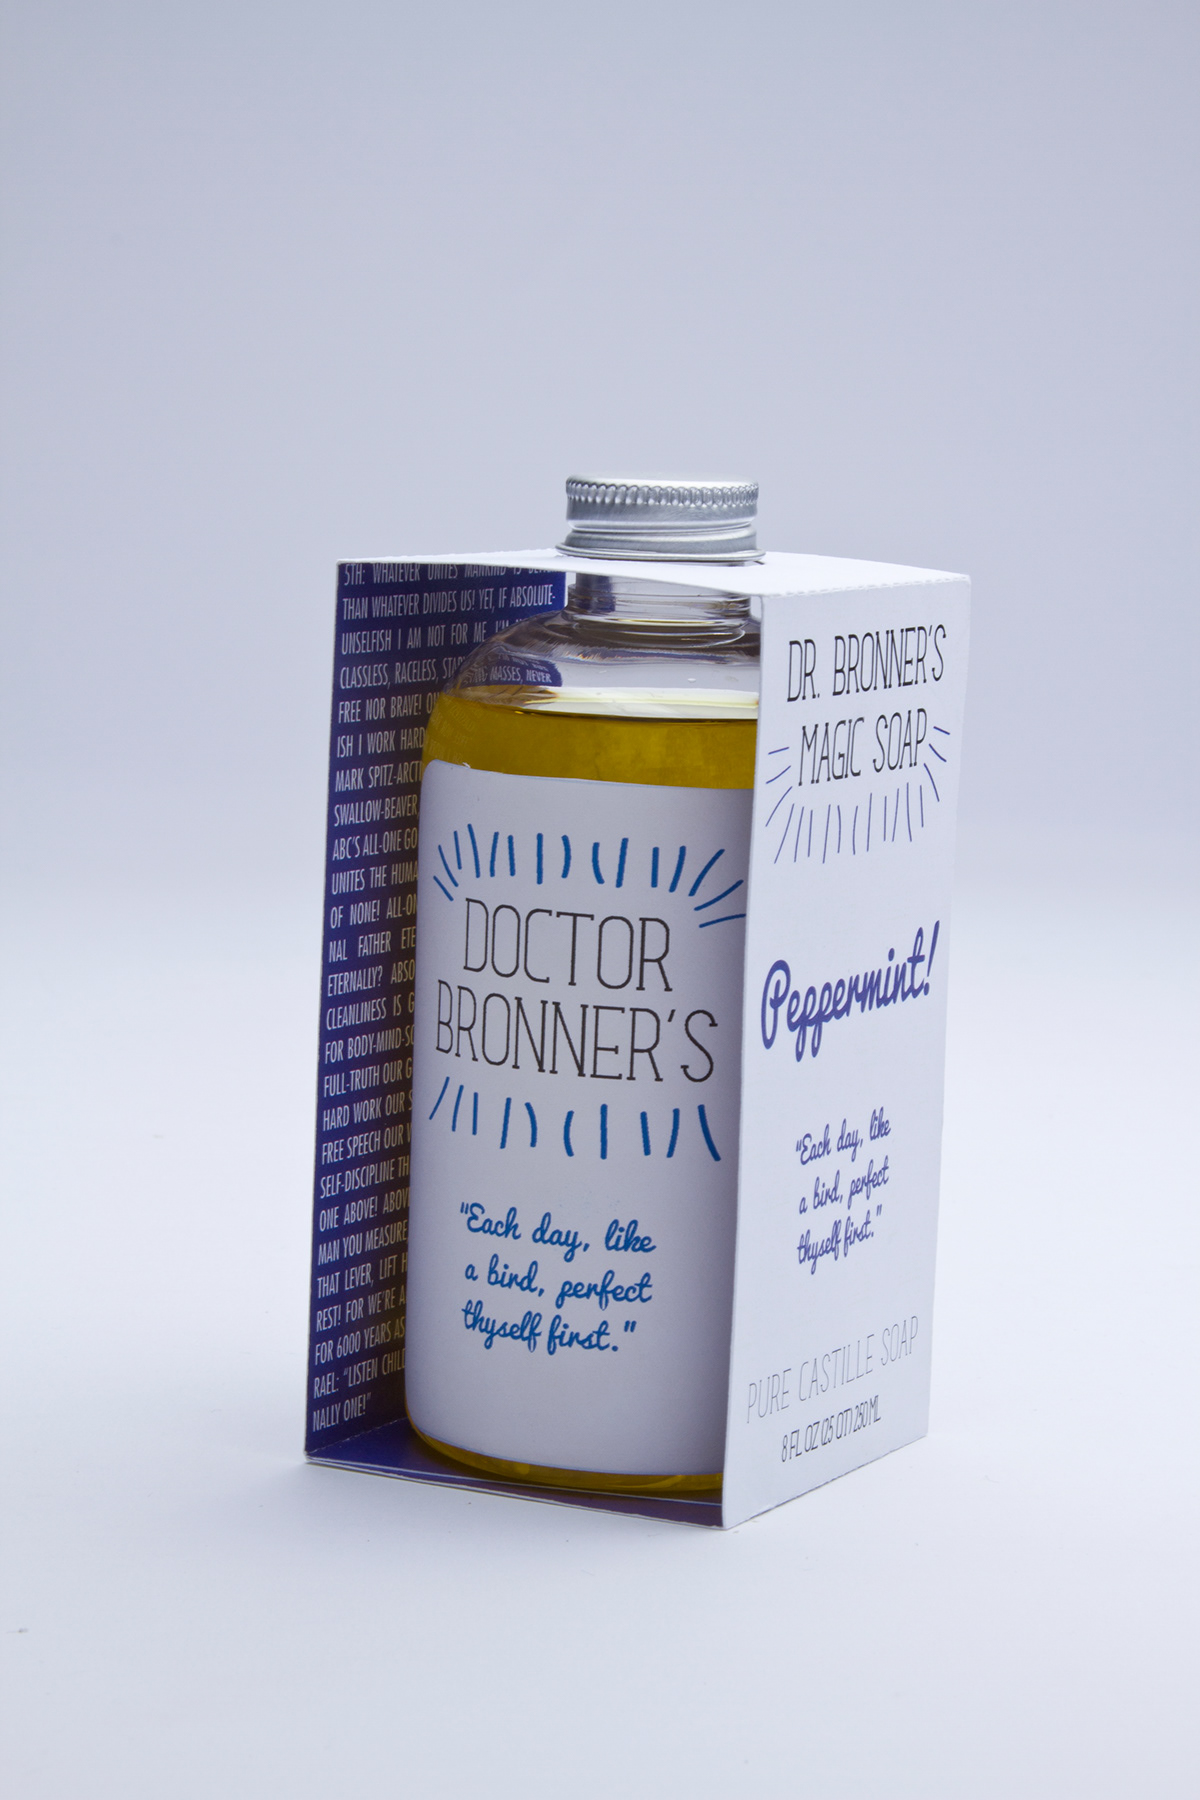 soap  rebrand  redesign peppermint  Lavender  almond dr bronner bath SHOWER